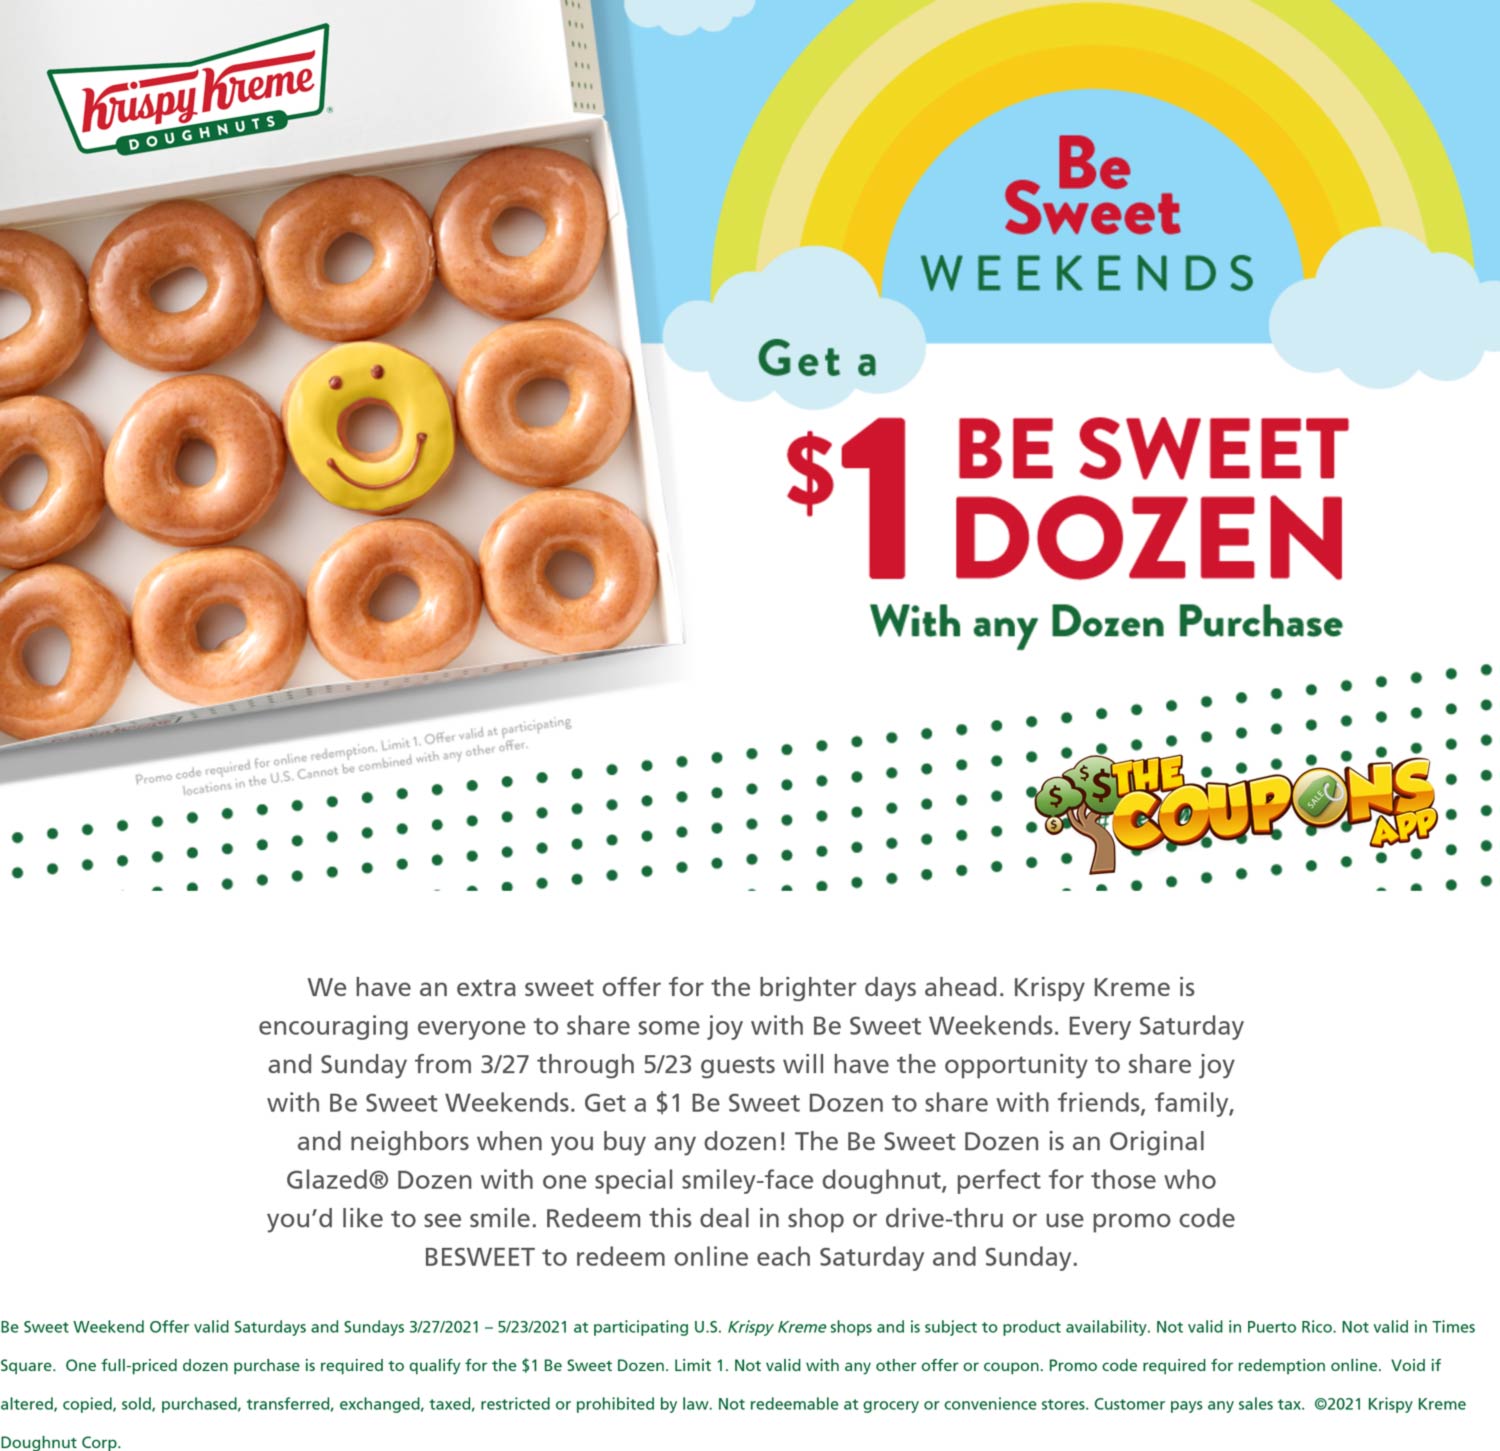 Second dozen for 1 weekends at Krispy Kreme doughnuts, or online via